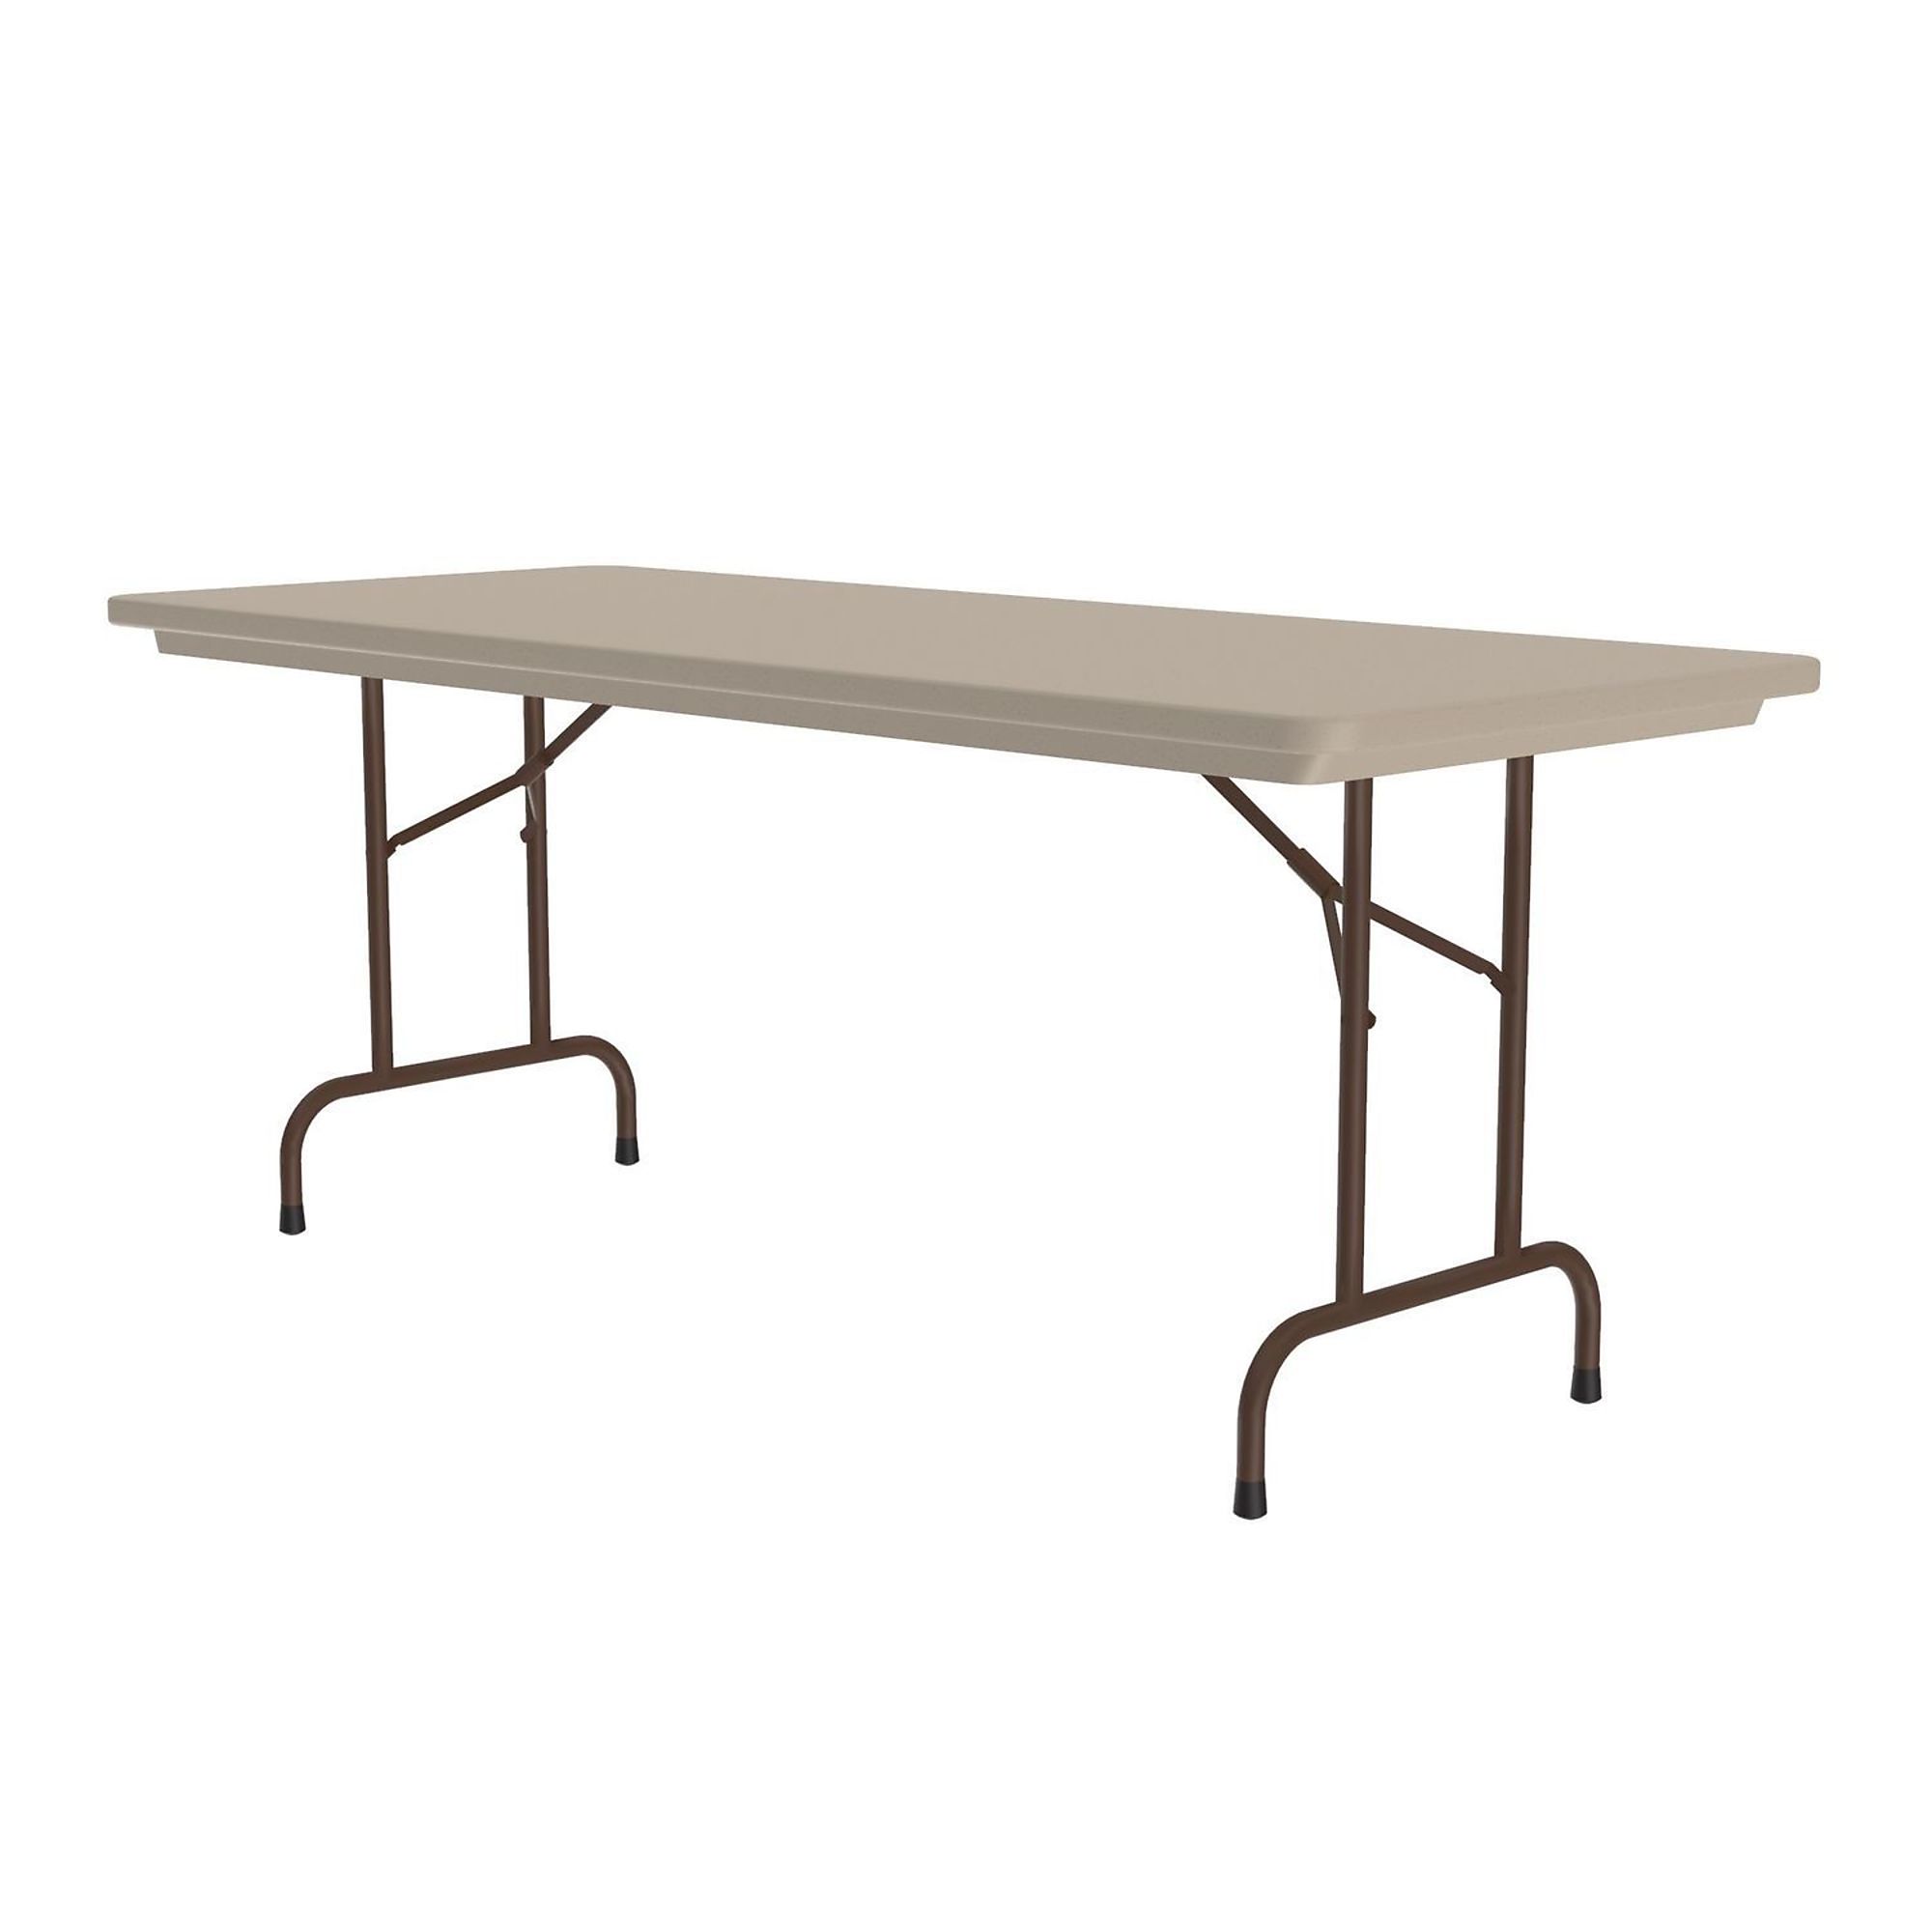 Correll, Plastic Folding Table, Mocha Granite Top, 30x96, Height 29 in, Width 30 in, Length 96 in, Model R3096-24